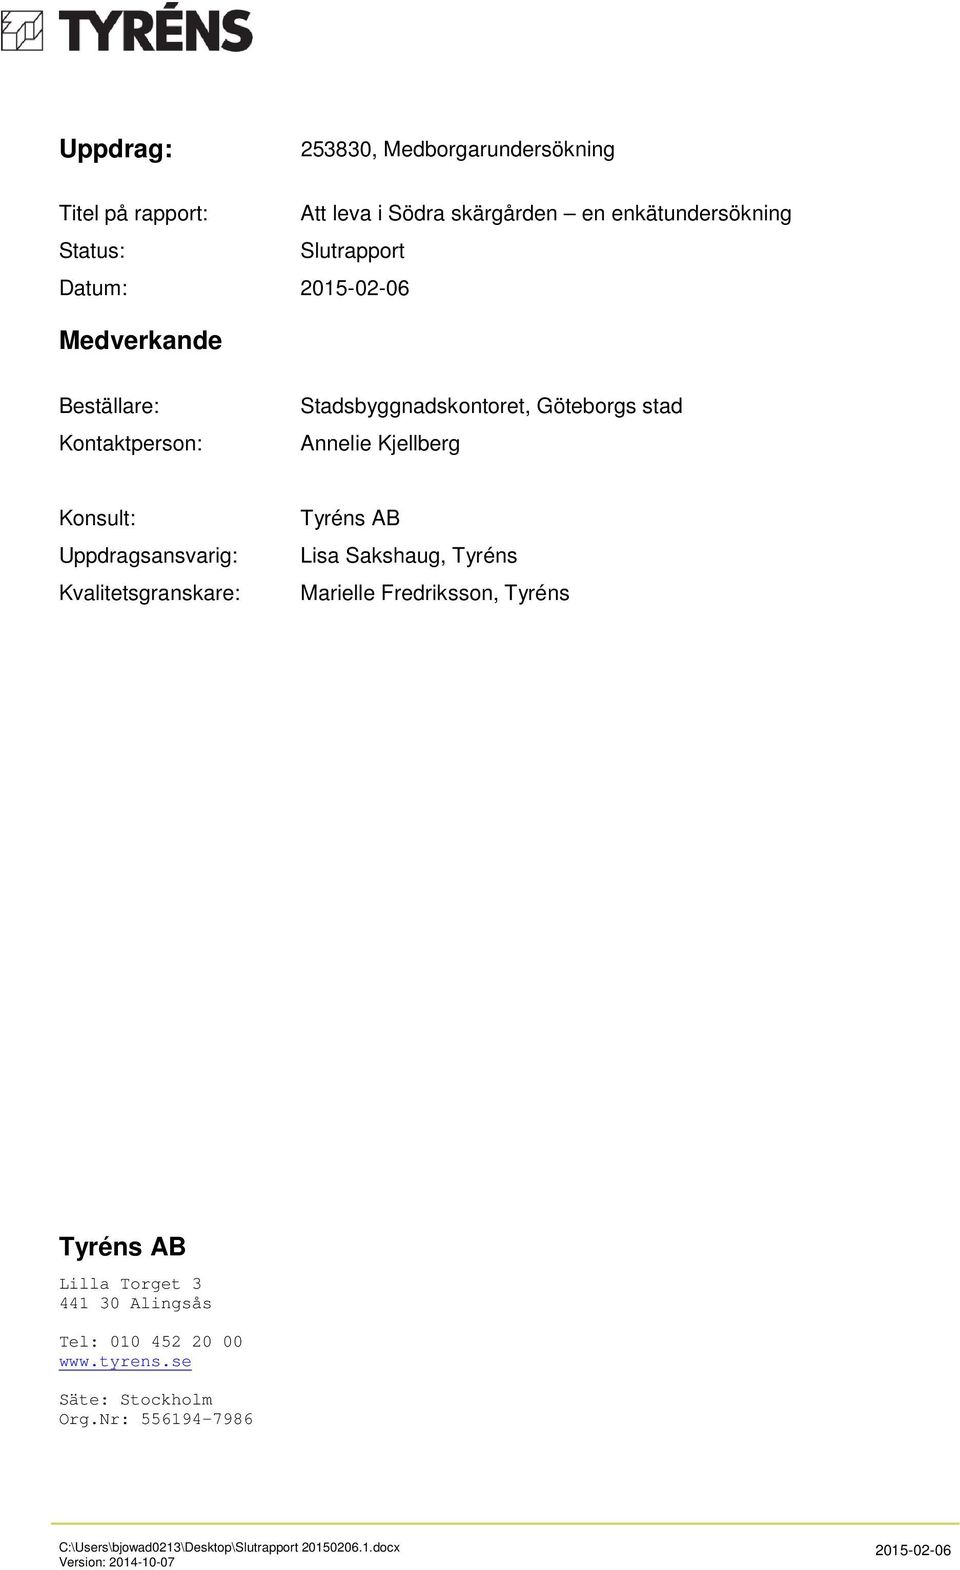 Konsult: Uppdragsansvarig: Kvalitetsgranskare: Tyréns AB Lisa Sakshaug, Tyréns Marielle Fredriksson, Tyréns